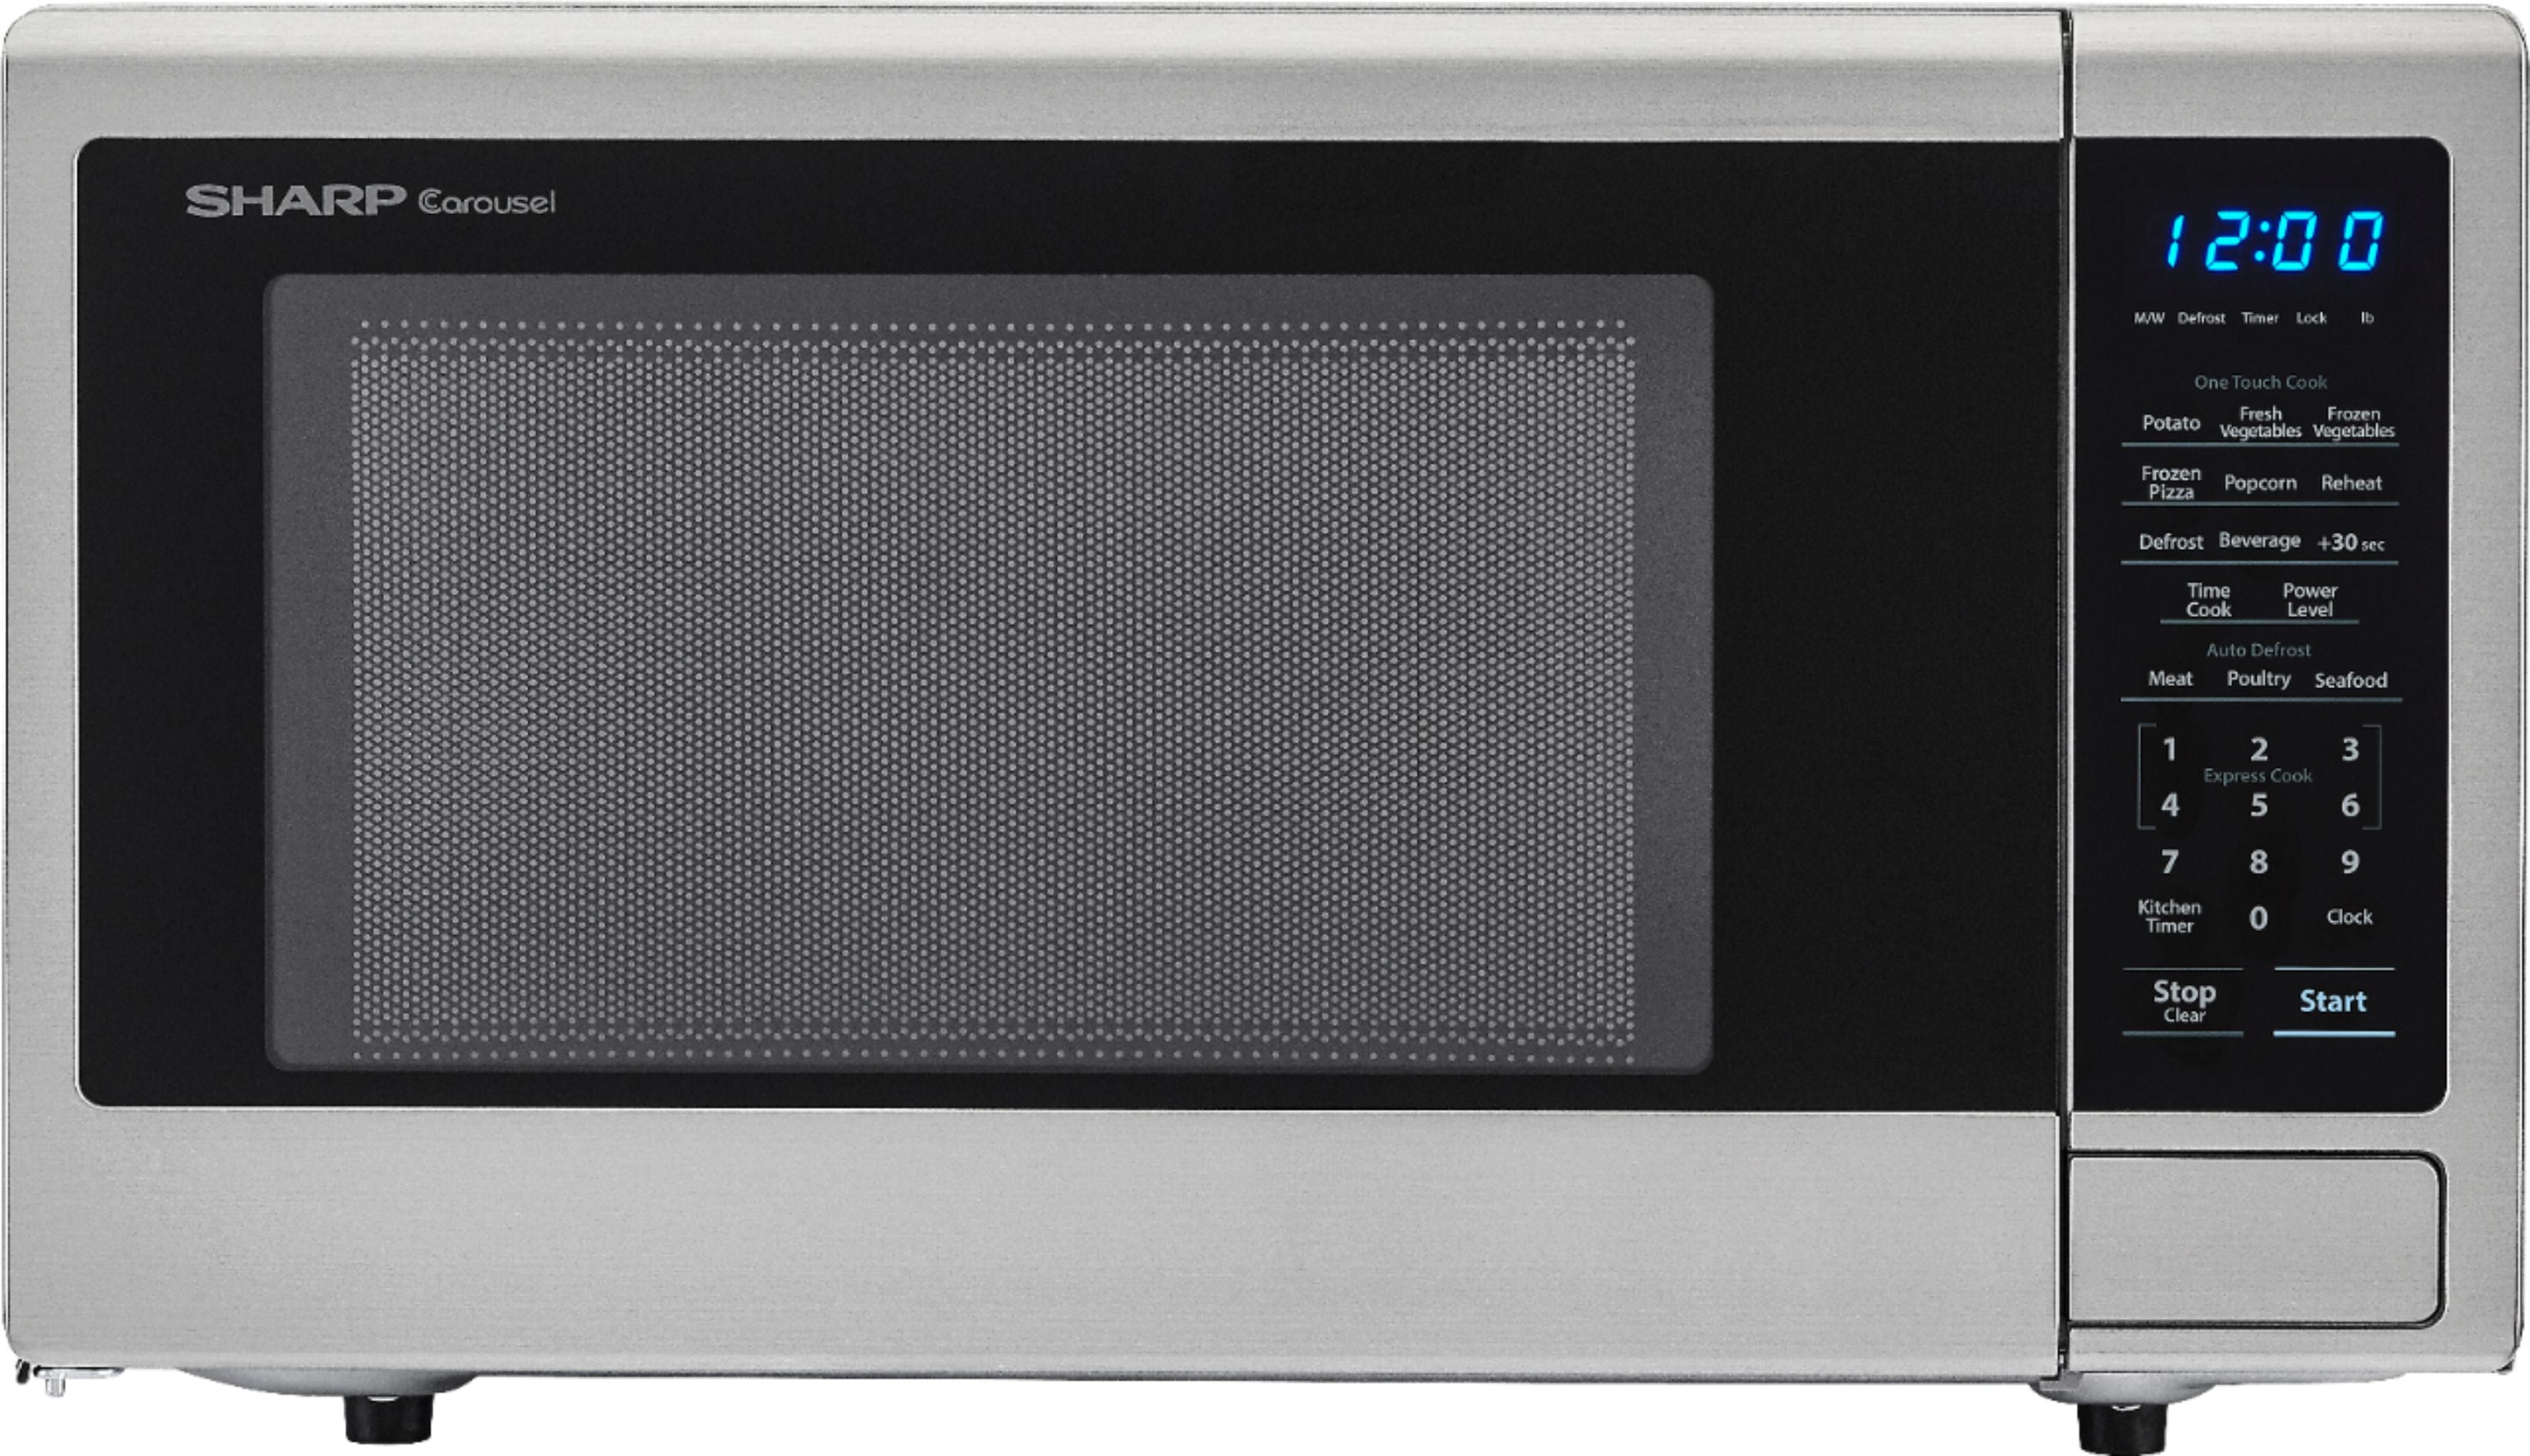 Sharp SMC1842CS 1.8 CF 1,100W Stainless Steel Countertop Microwave Oven - Certified Refurbished